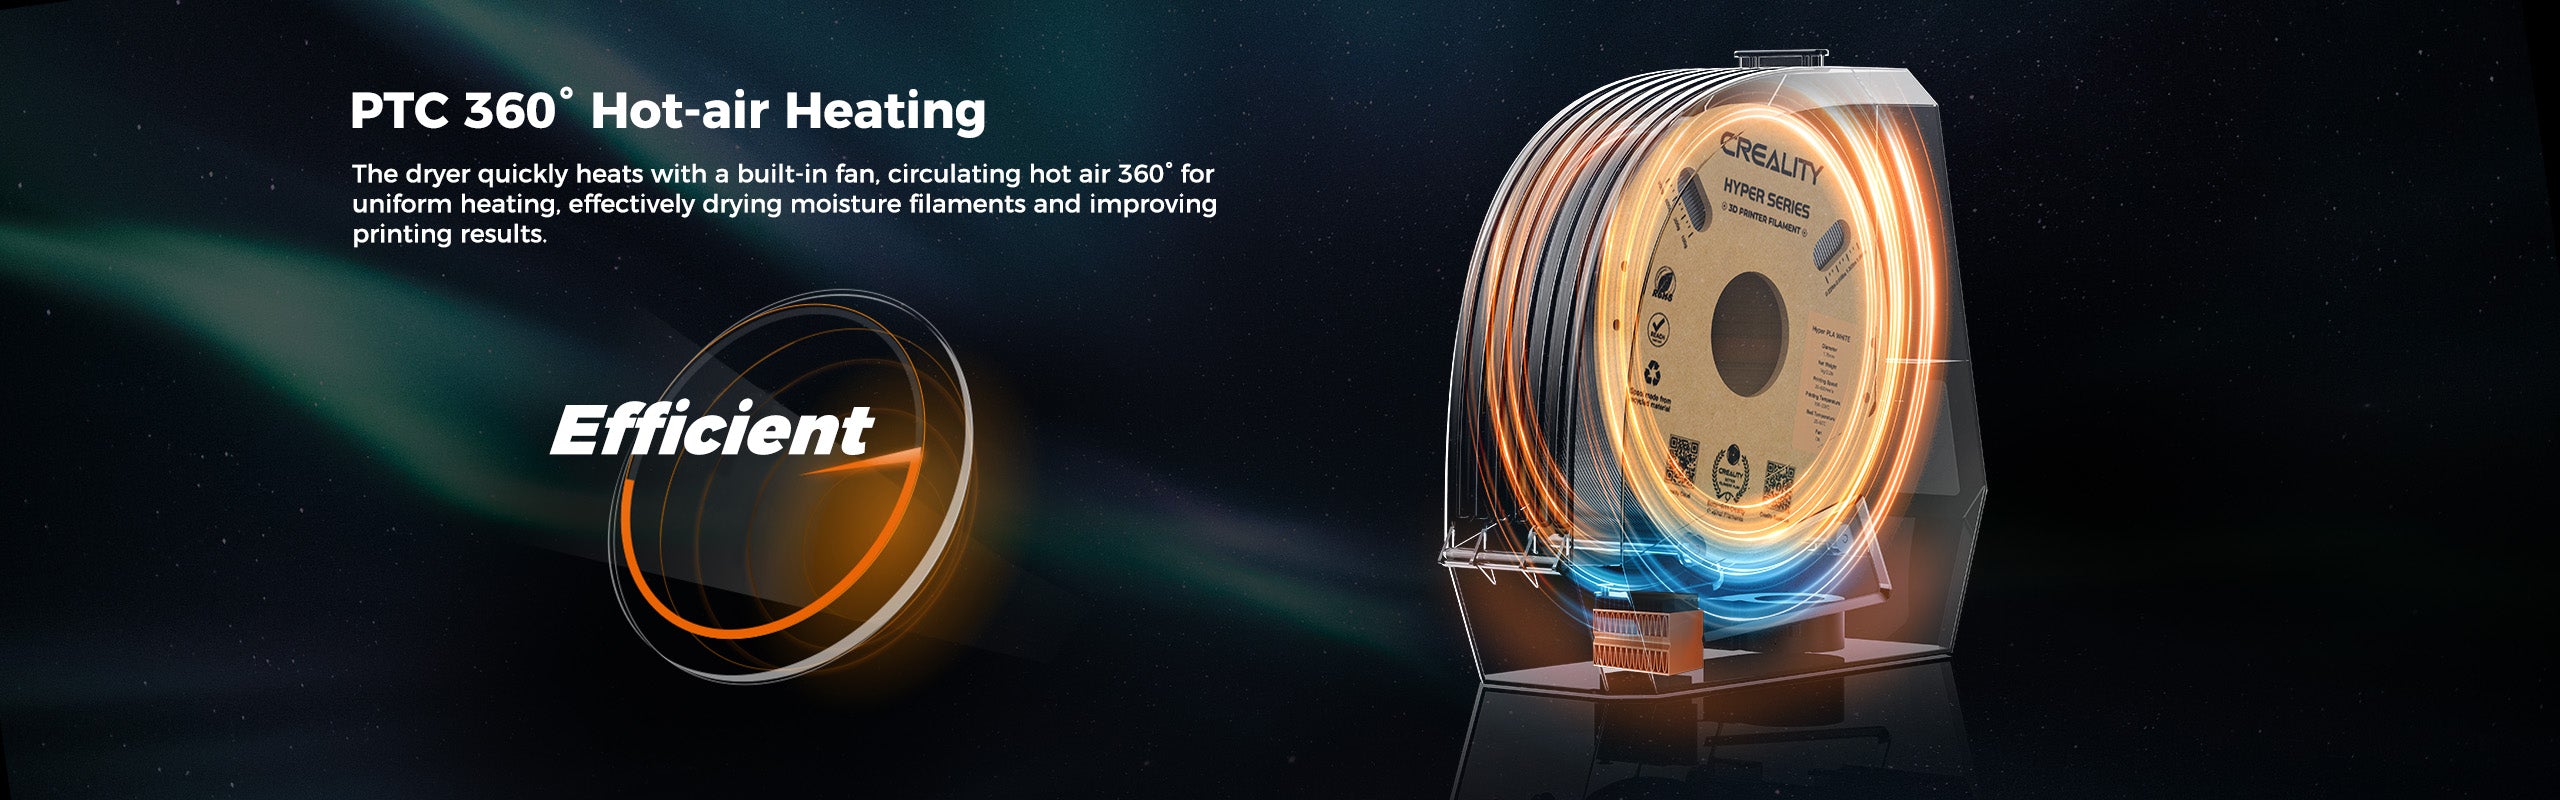 space pi has PTC 360° Hot-air Heating